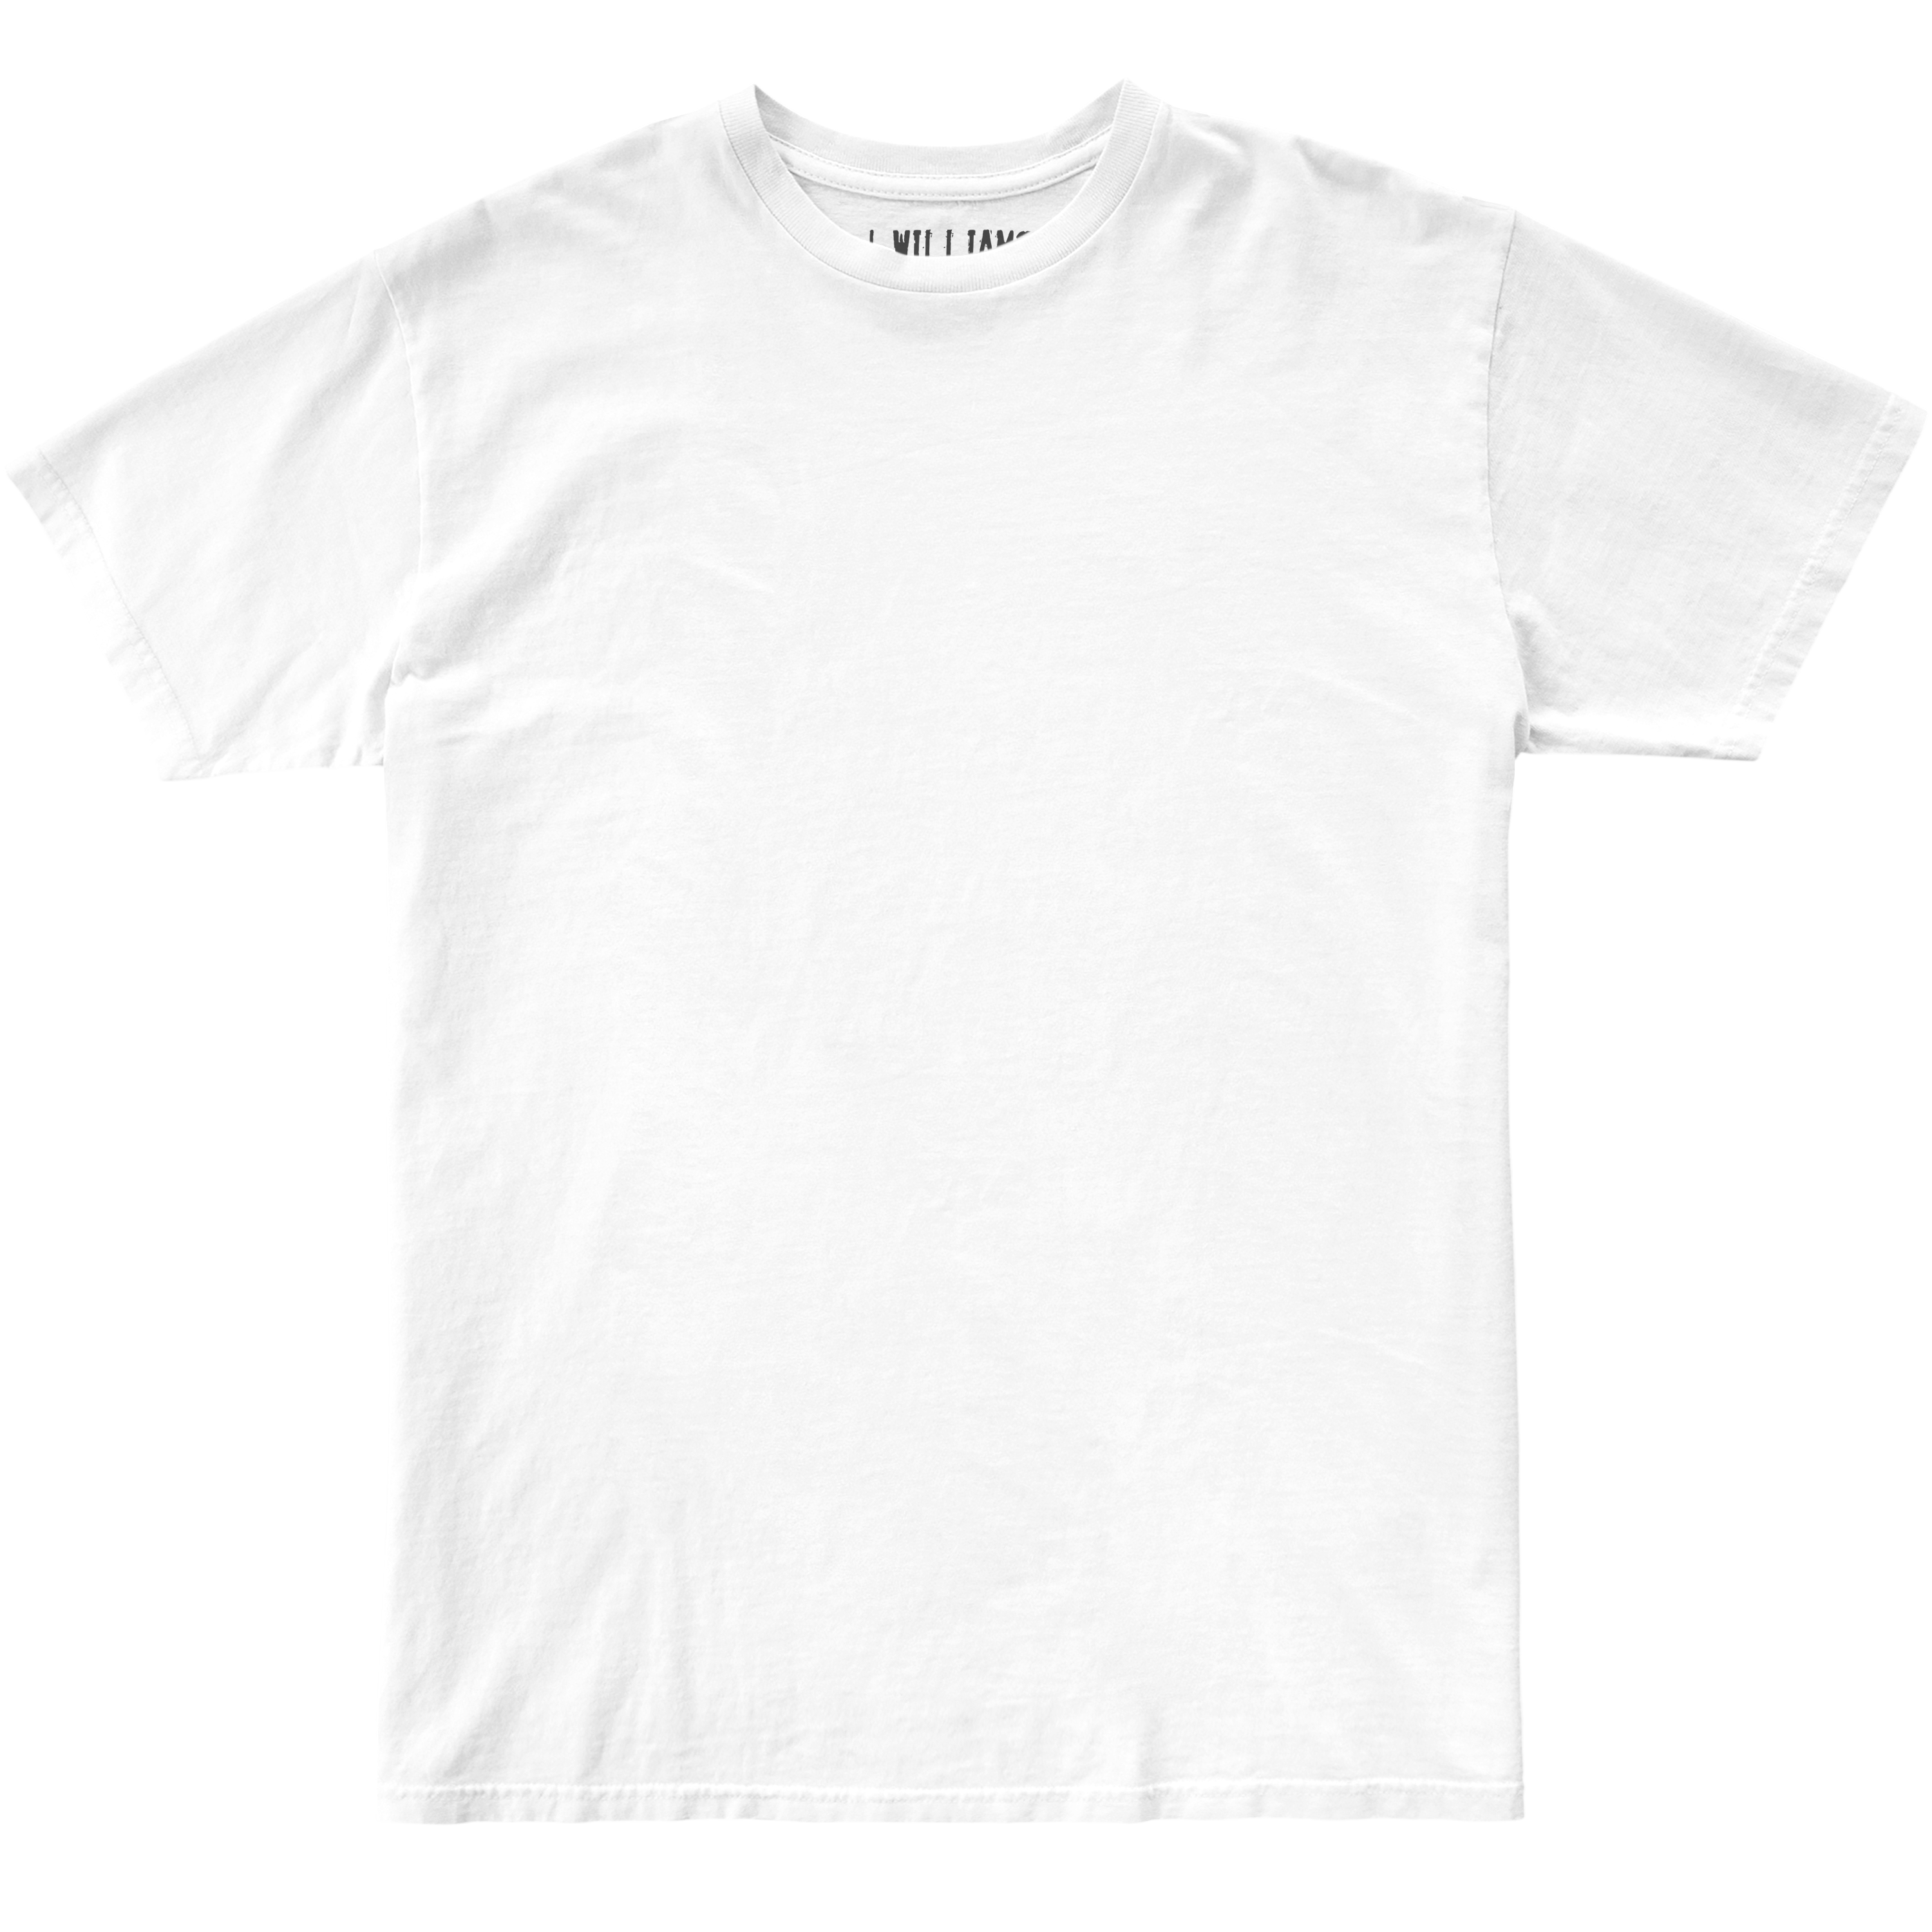 Boston Bruins Retro Brand Light Gray TriBlend Vintage Logo T-Shirt